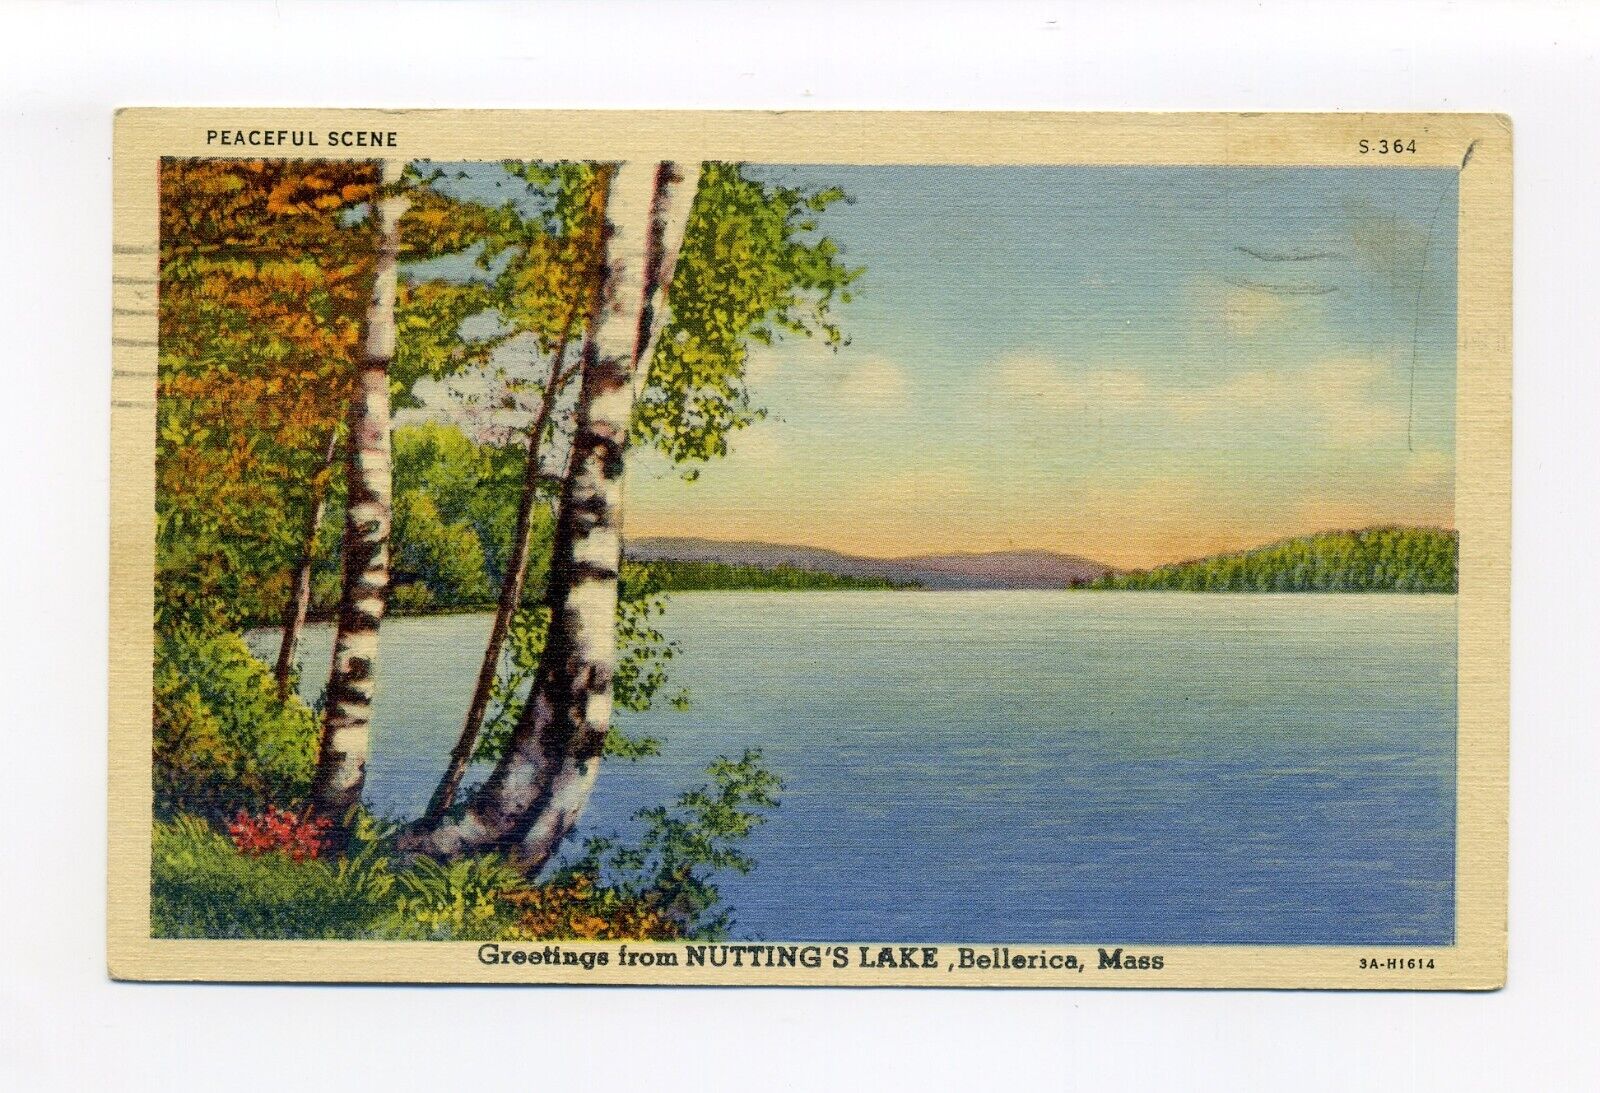 Billerica MA 1943 postcard, Nutting Lake, peaceful scene, birches on water